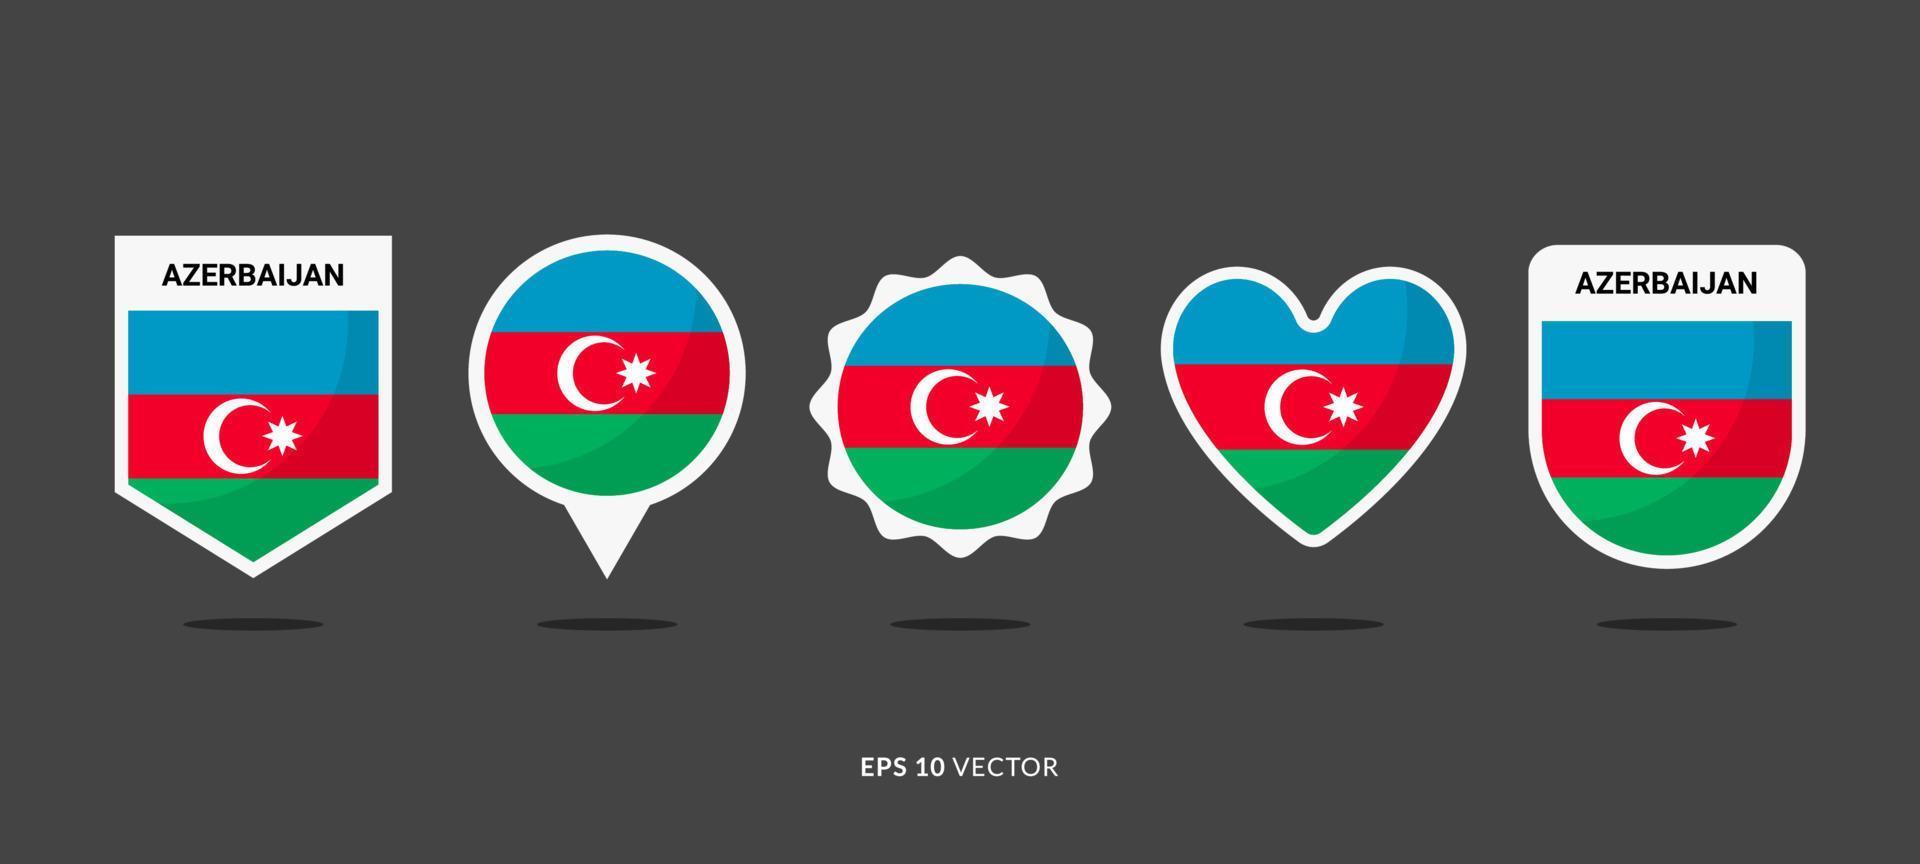 azerbaiyán bandera conjunto vector ilustración. bueno usado para pegatina, logo, icono, clipart, etc - eps 10 vector